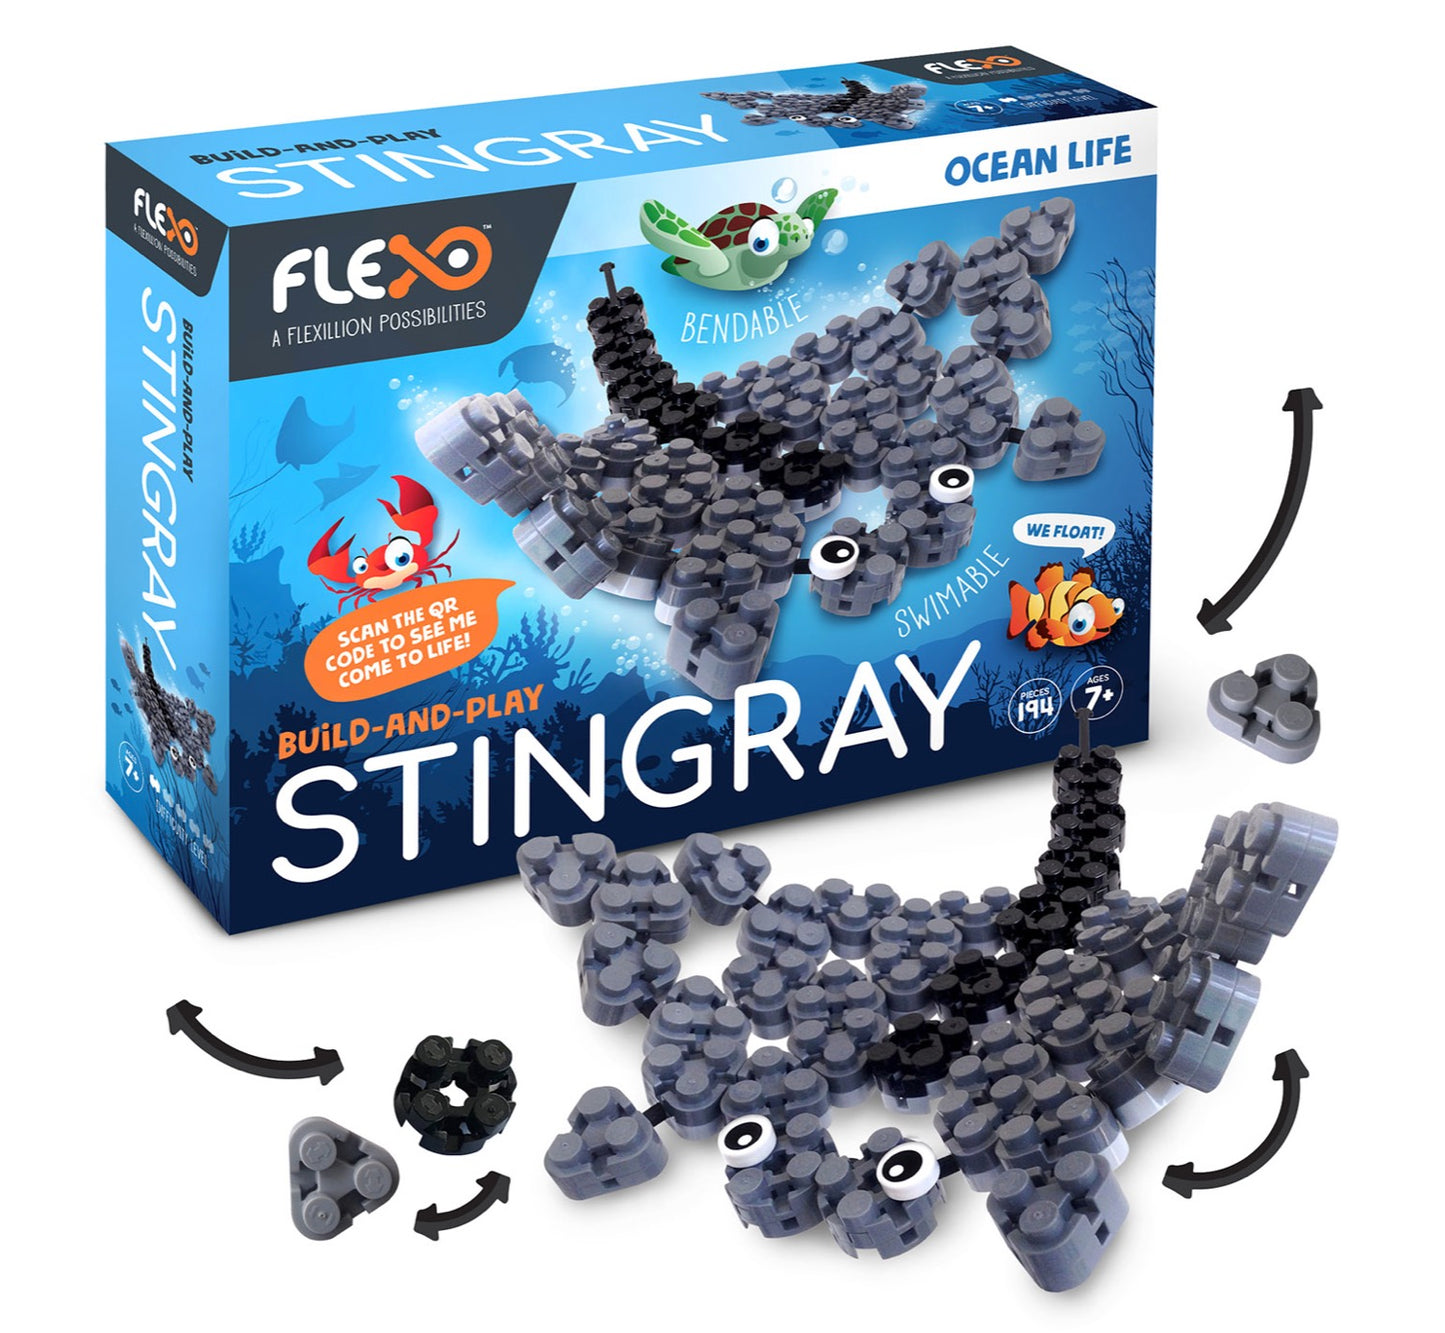 Flexo Flexible Brick System Stingray